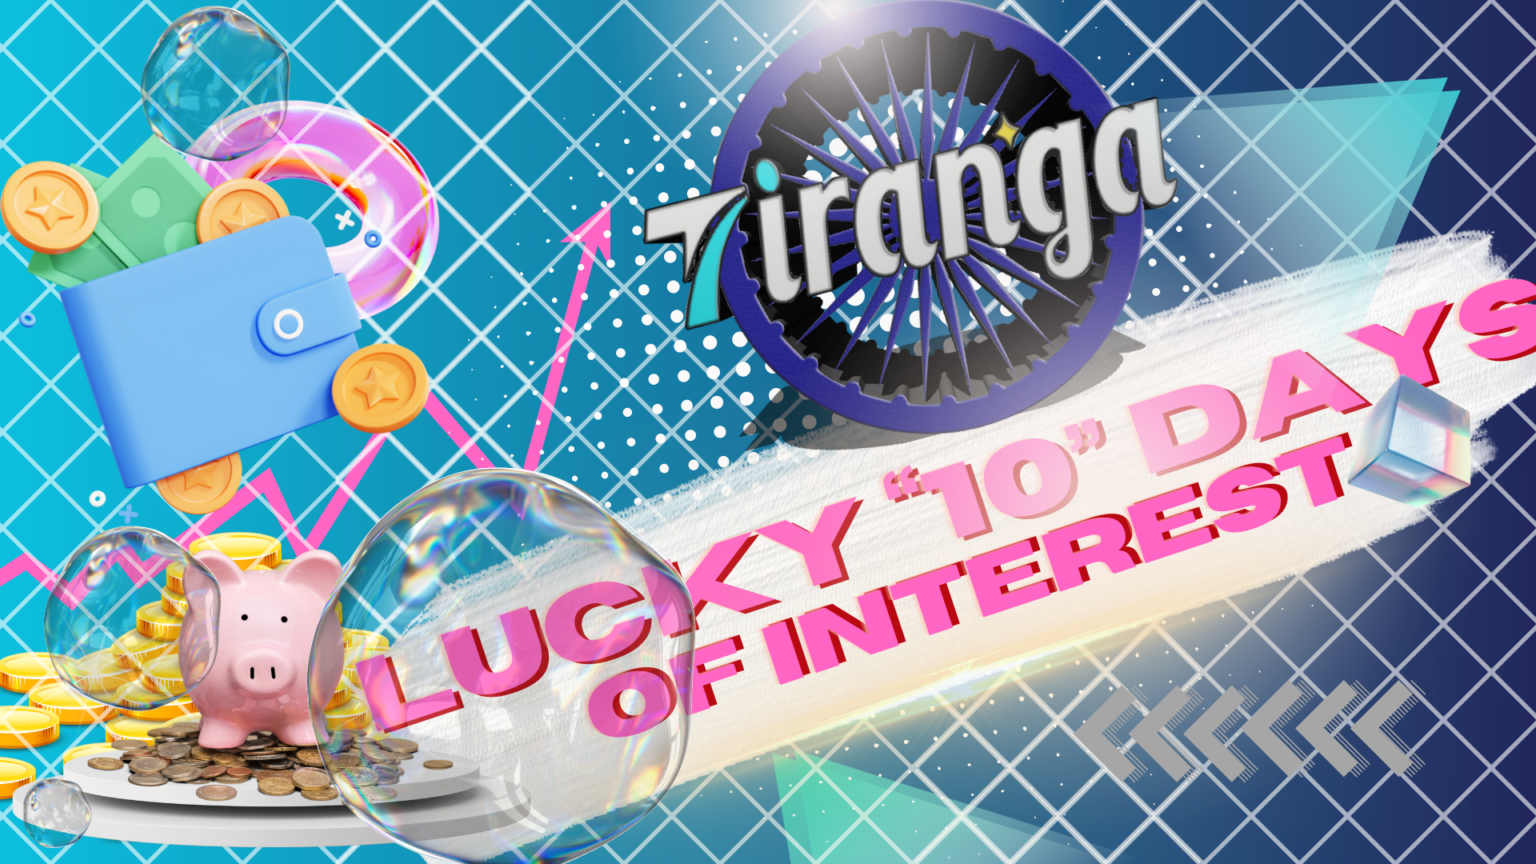 Tiranga Games Lucky 10 Days of Interest